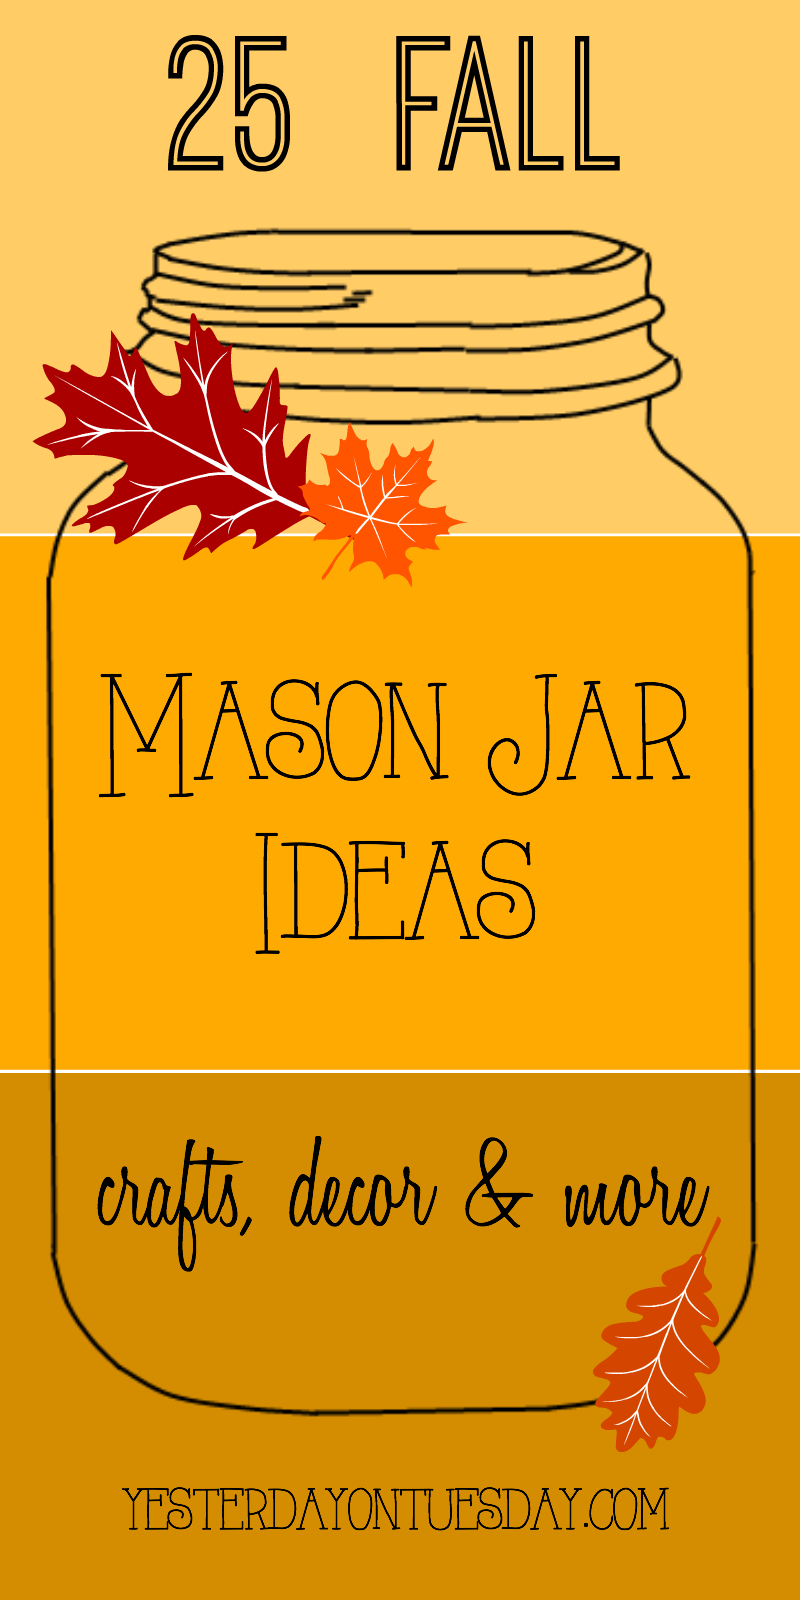 25 Fall Mason Jar Ideas